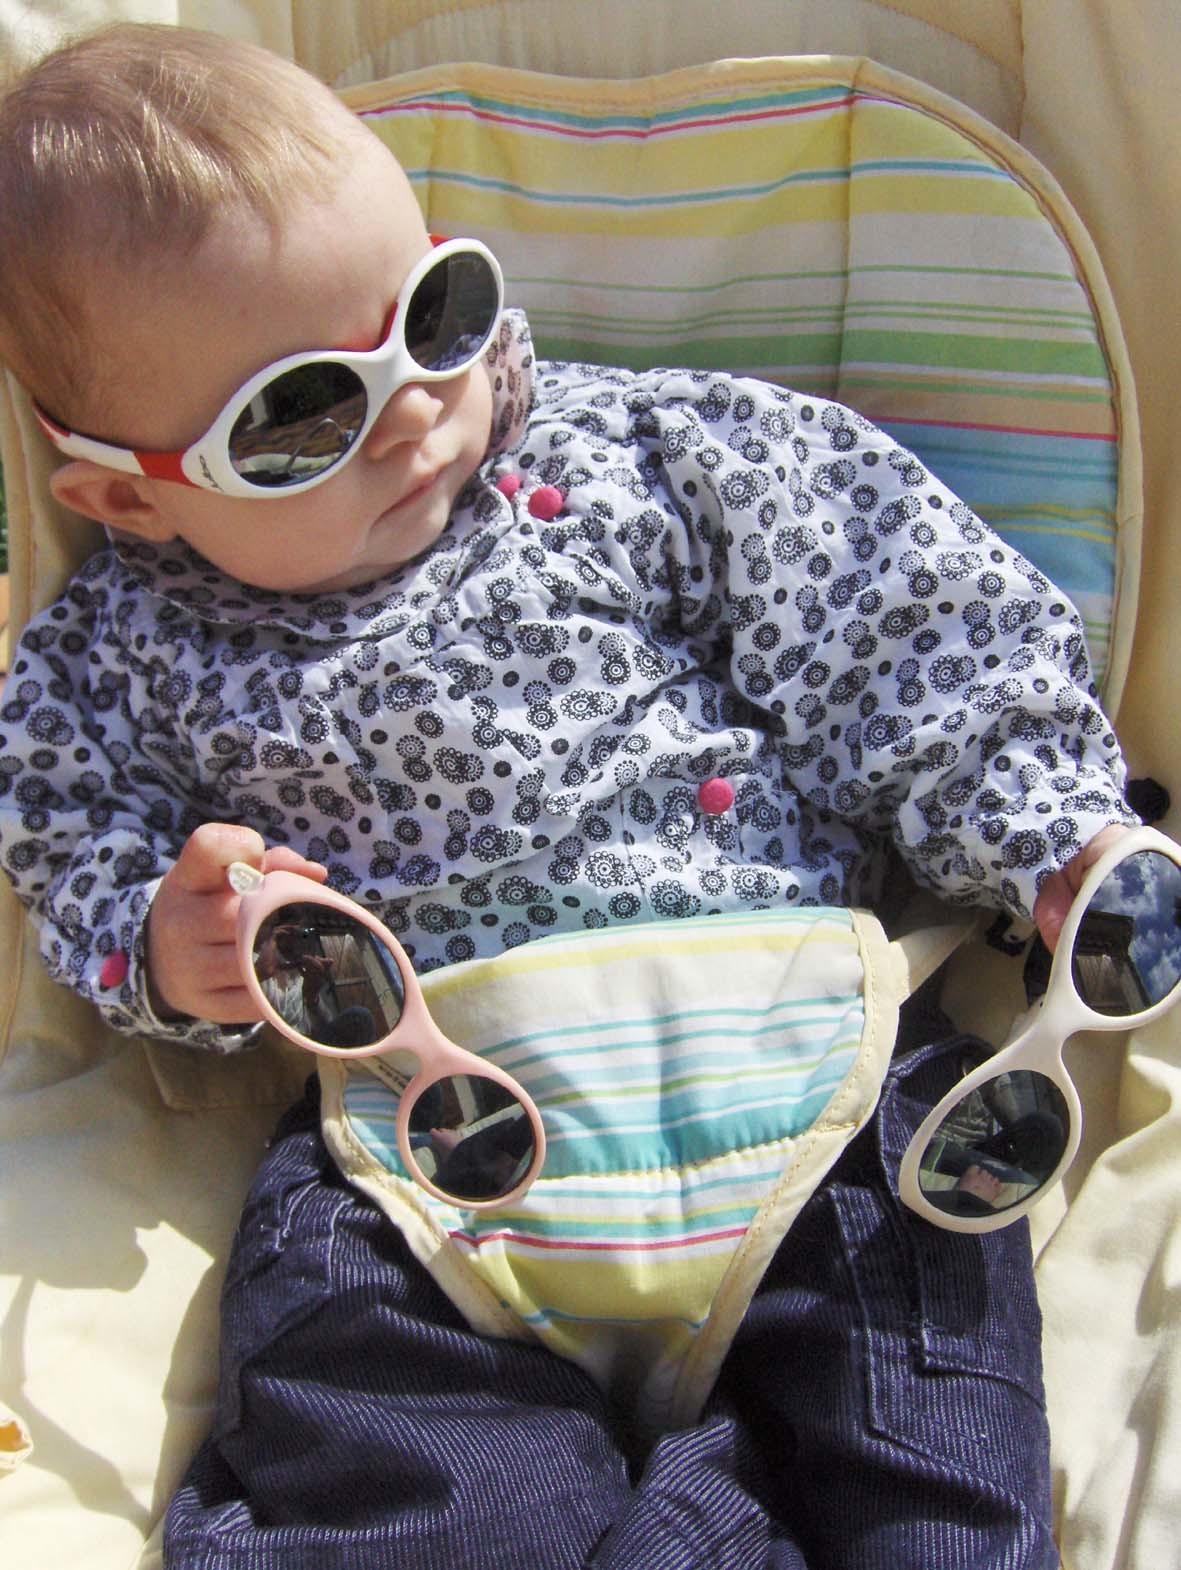 https://images.squarespace-cdn.com/content/v1/55159071e4b01b71130fc2f8/1549800006883-XN0VJO0NPA3X228L2IDU/baby+wearing+sunglasses+and+holding+shades